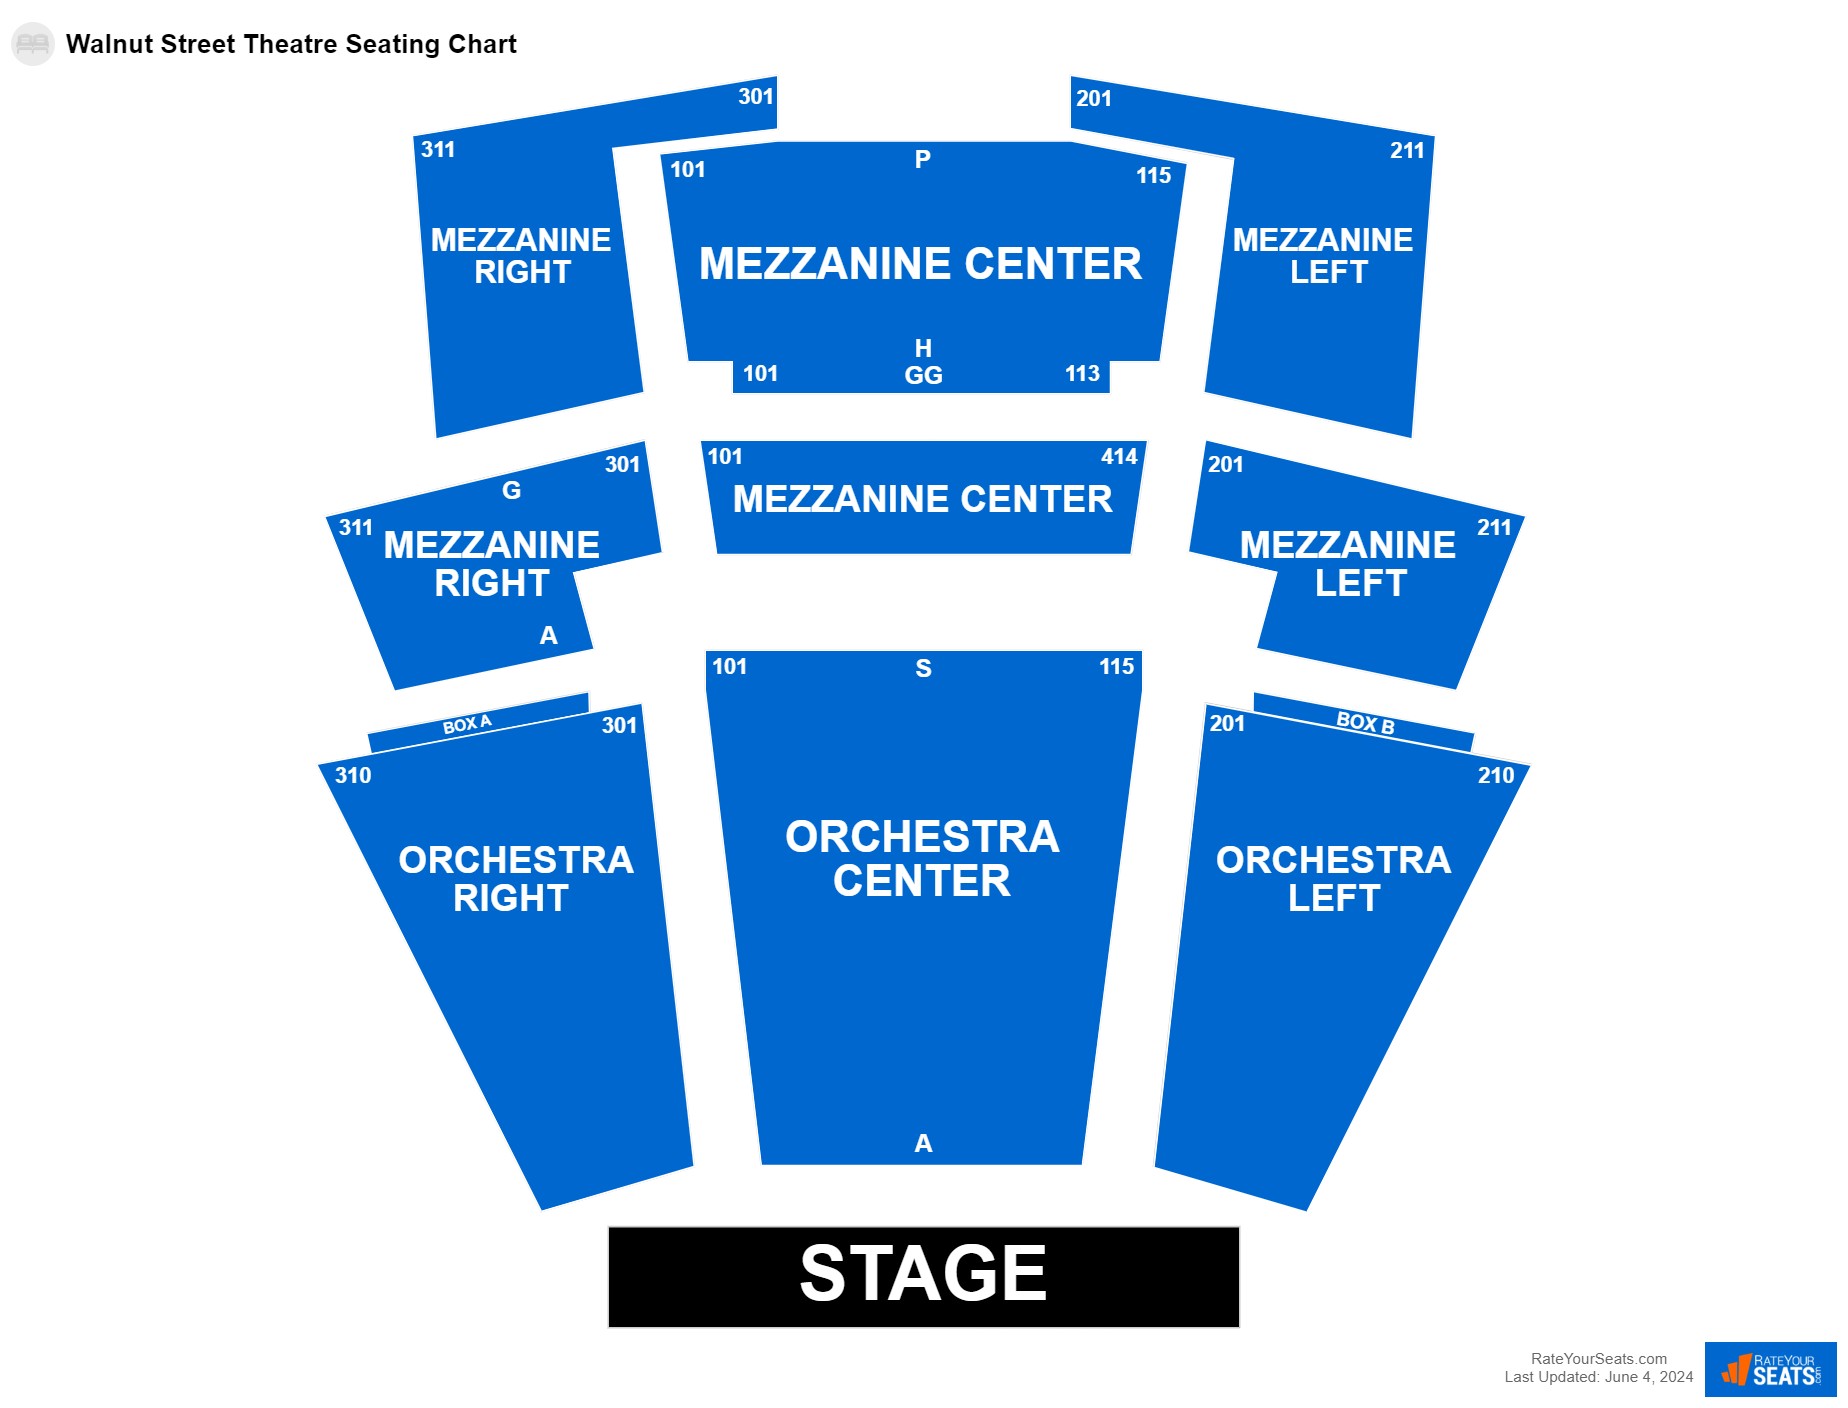 Theater seating chart at Walnut Street Theatre